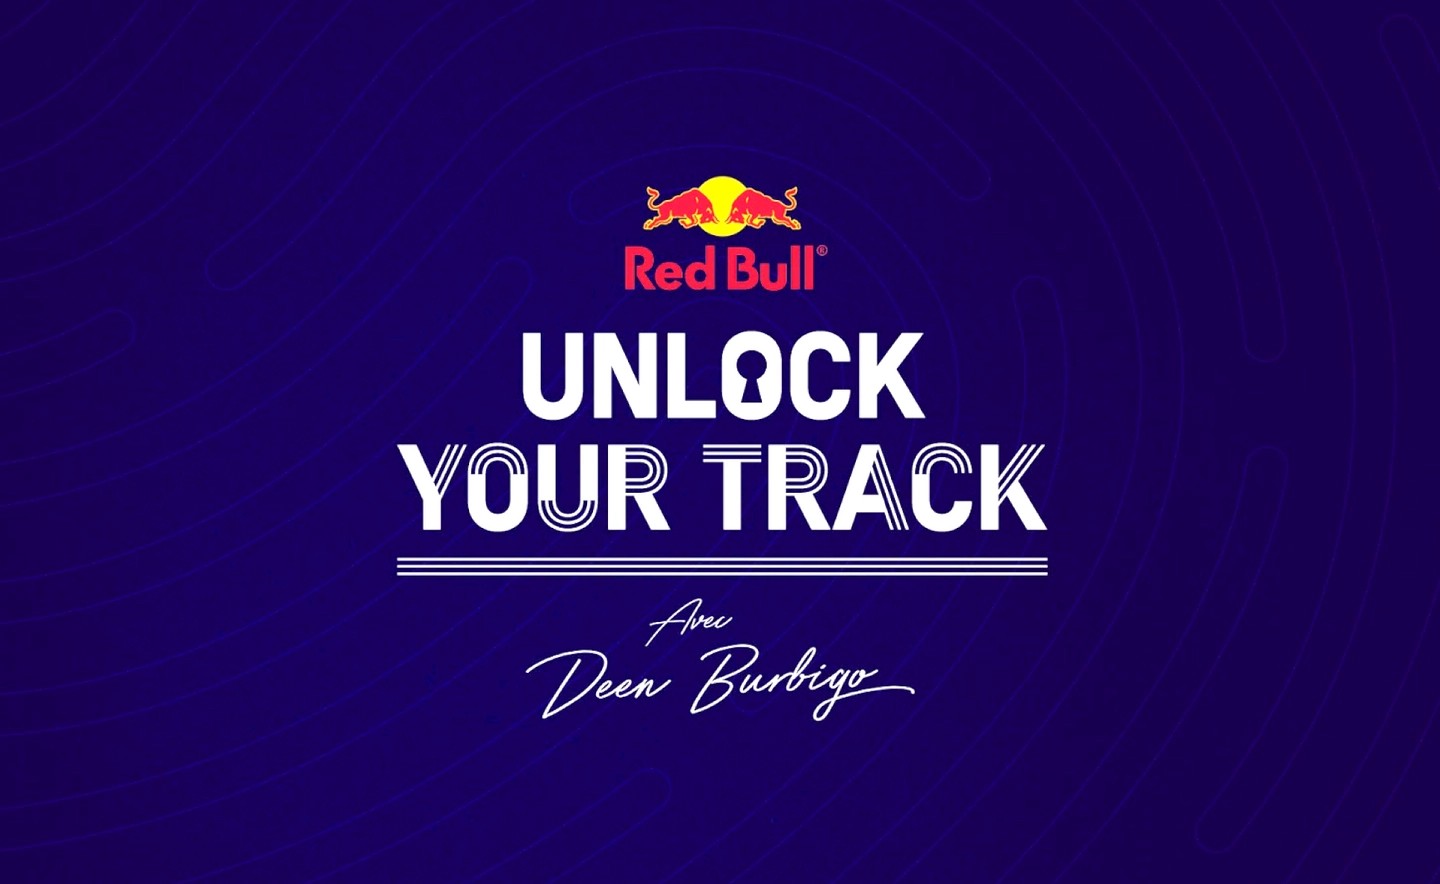 Unlock your track